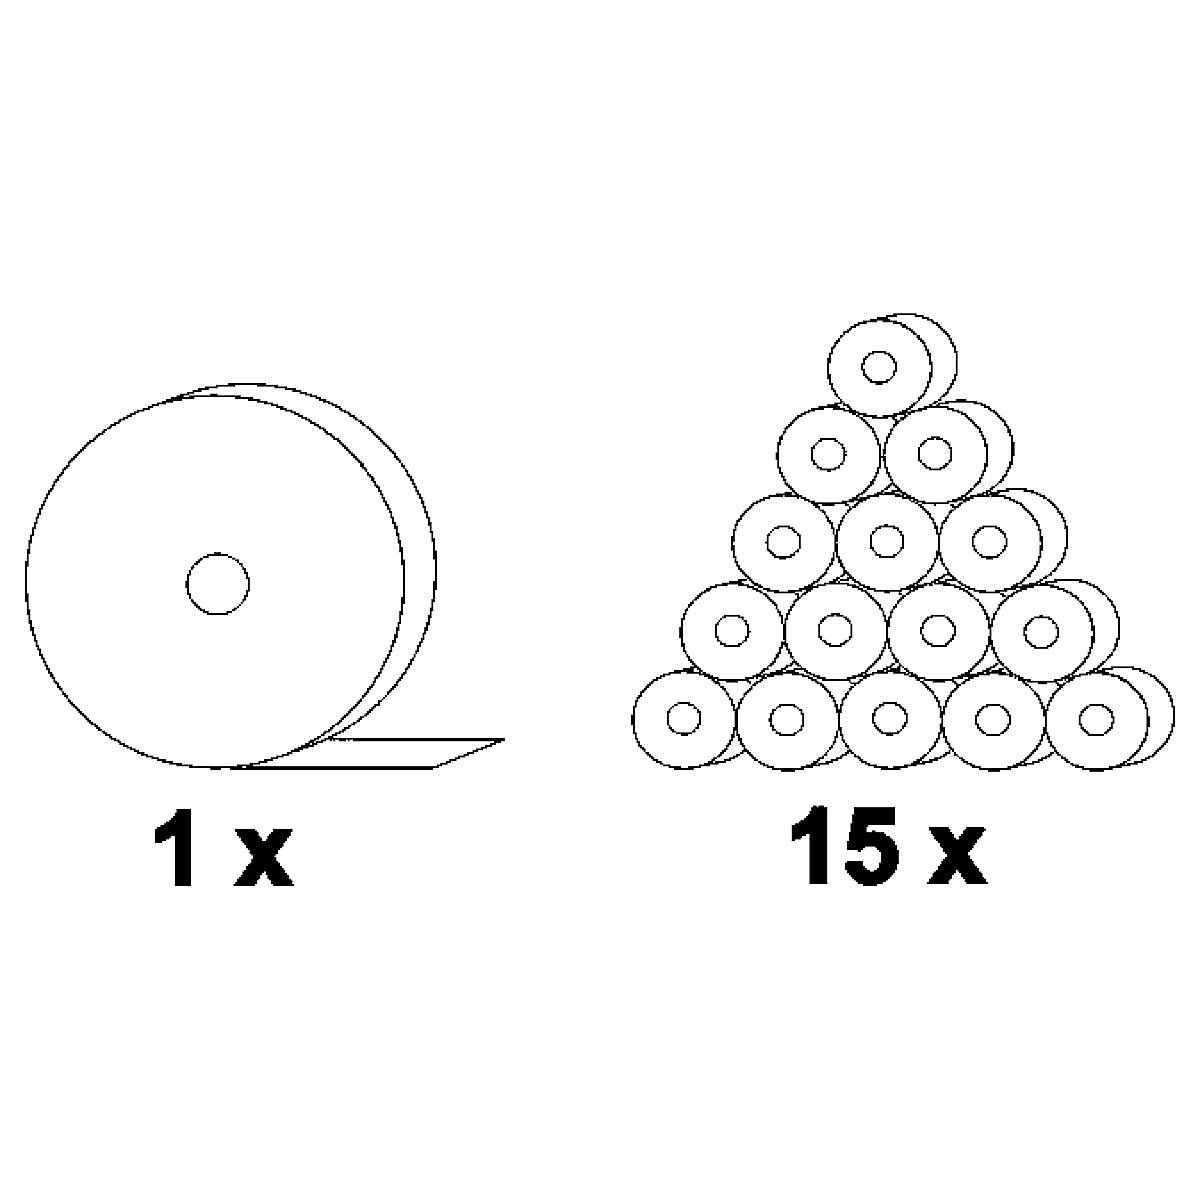 Jumbo – Carta igienica, rotolo industriale – TORK: carta tissue Standard, a  1 velo, bianca, conf. da 6 rotoli